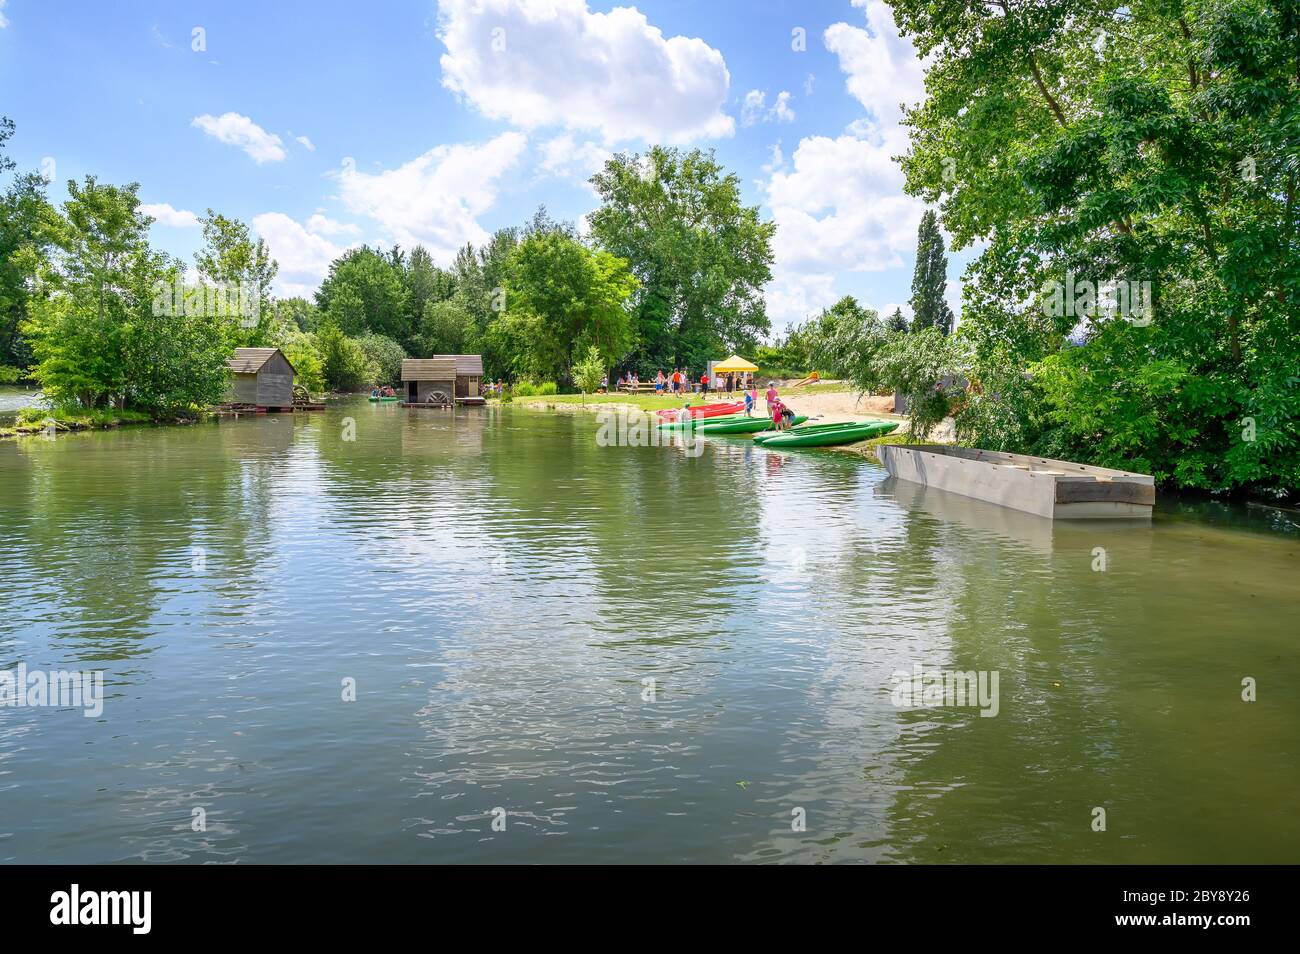 Korzo Zalesie - area for leisure activities by Little Danube river in village of Zalesie (SLOVAKIA) Stock Photo